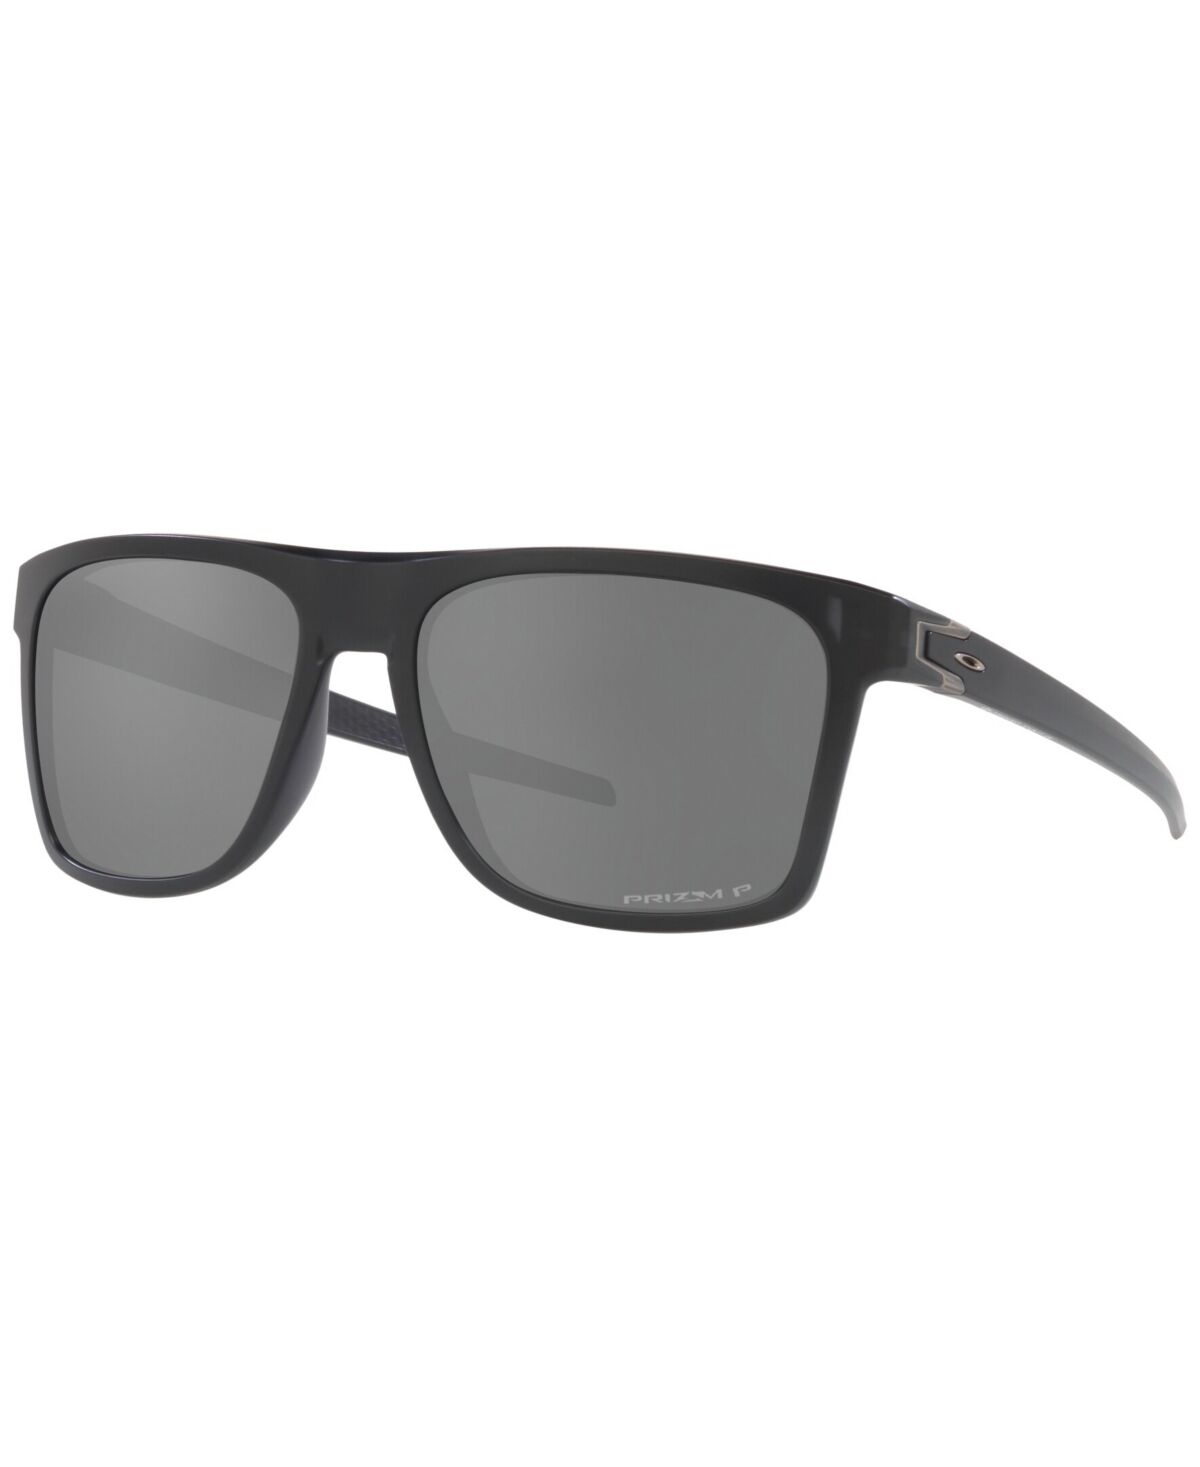 Oakley Men's Polarized Sunglasses, Leffingwell 57 - Matte Black Ink